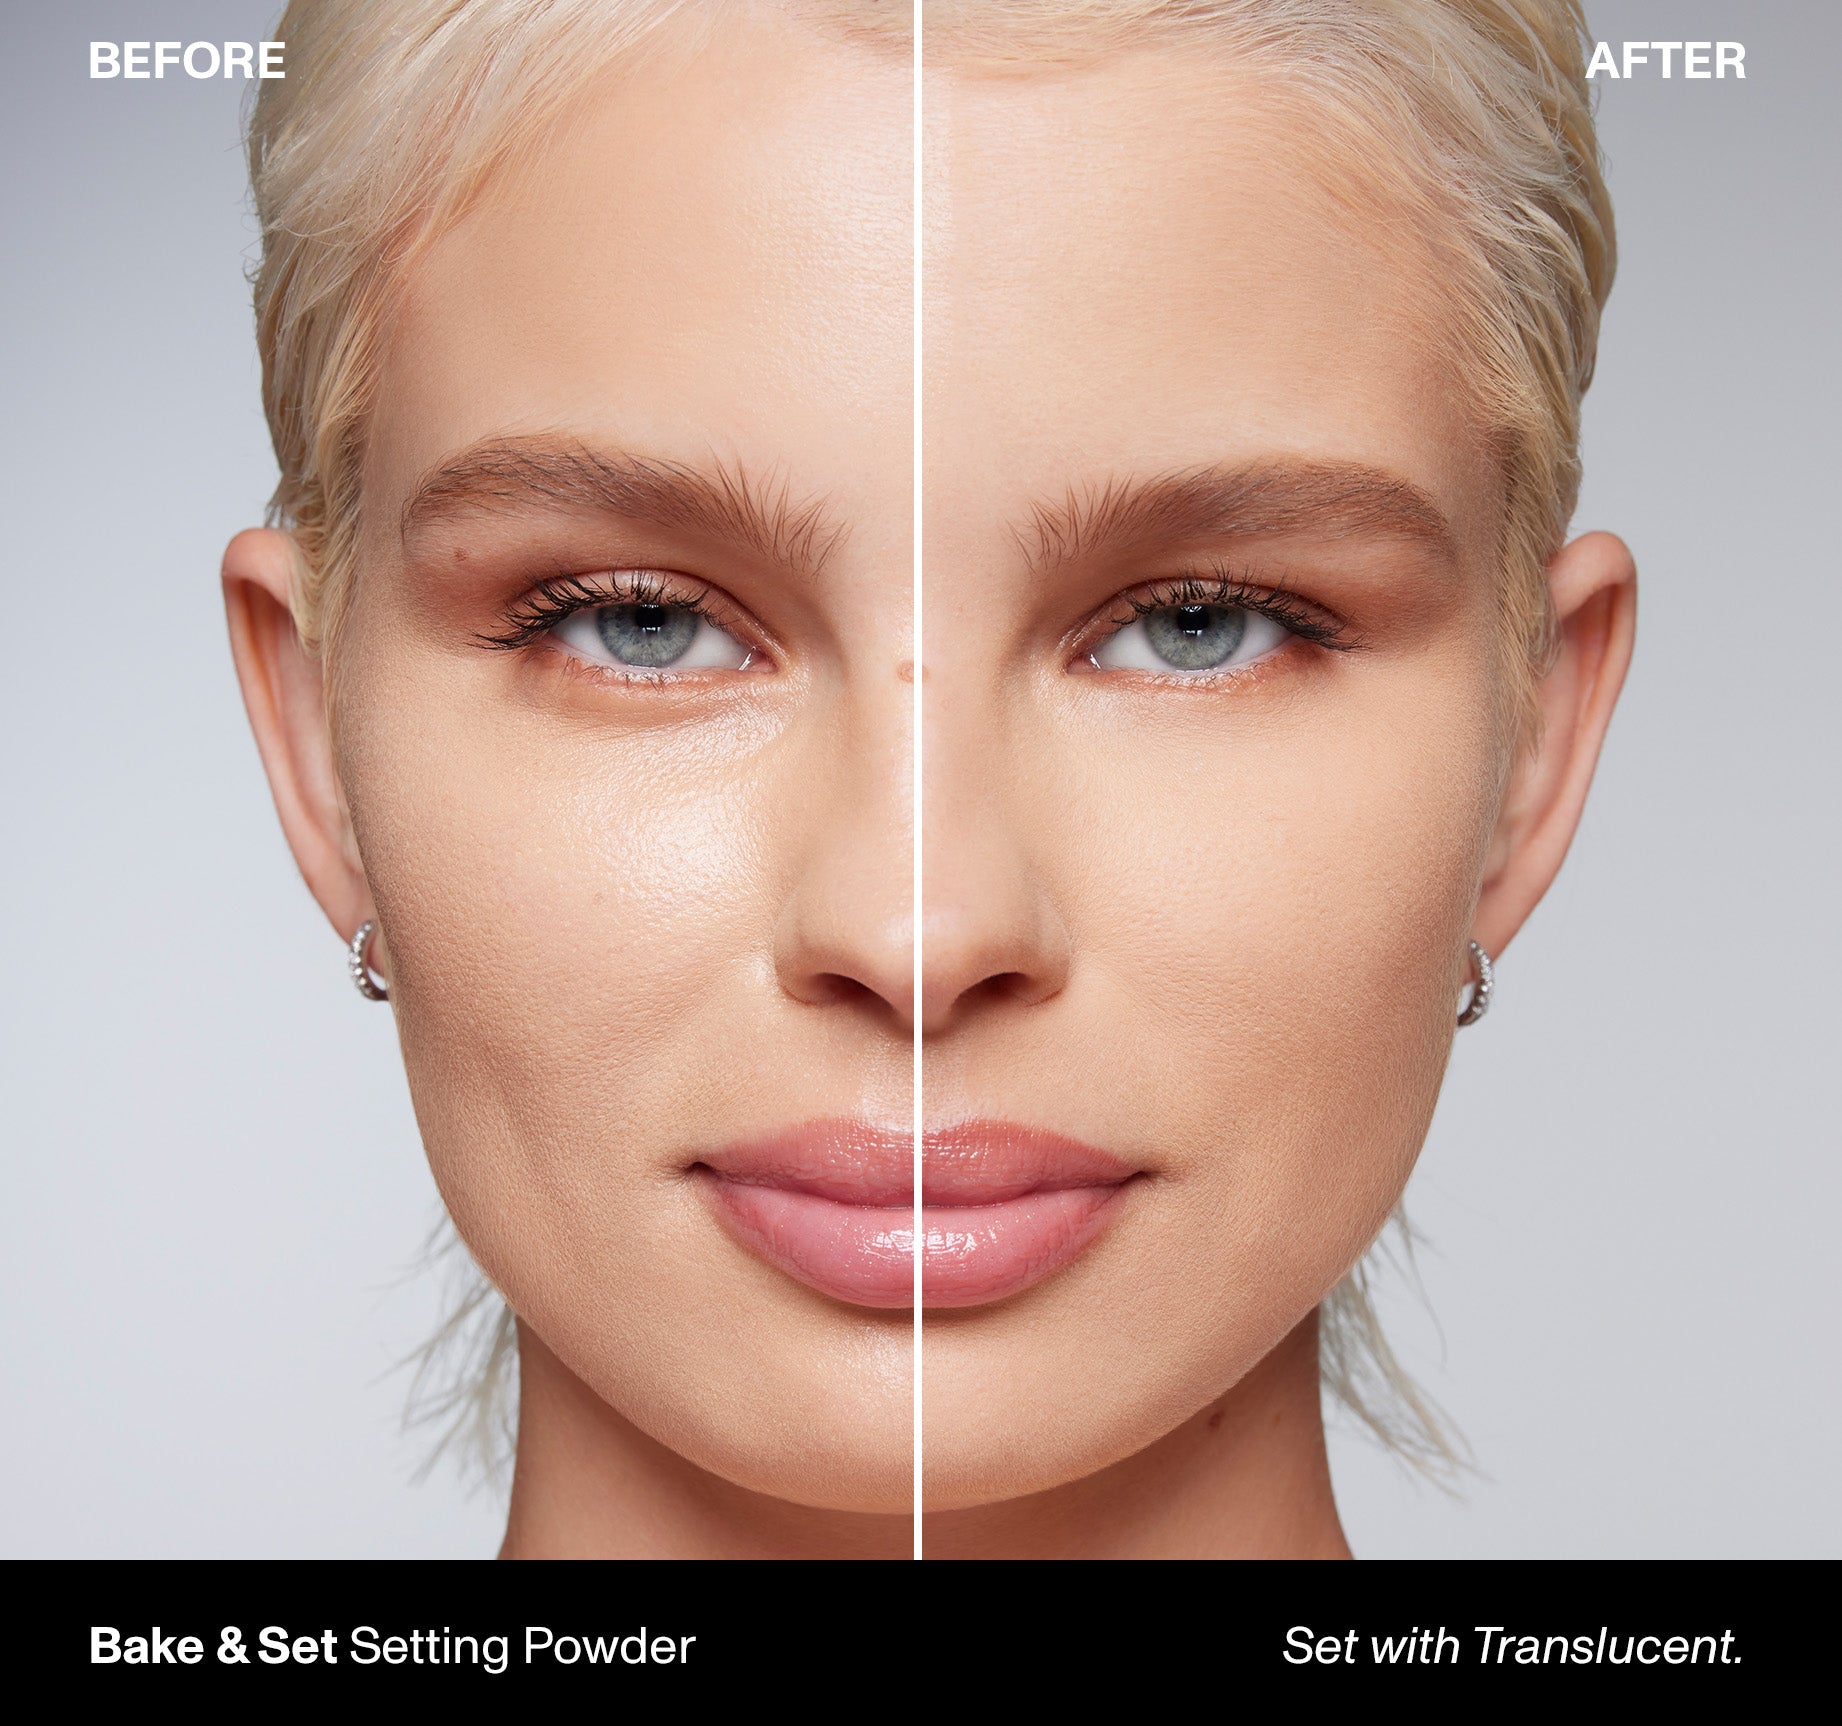 Bake & Set Soft Focus Setting Powder - Translucent Regular - Image 3